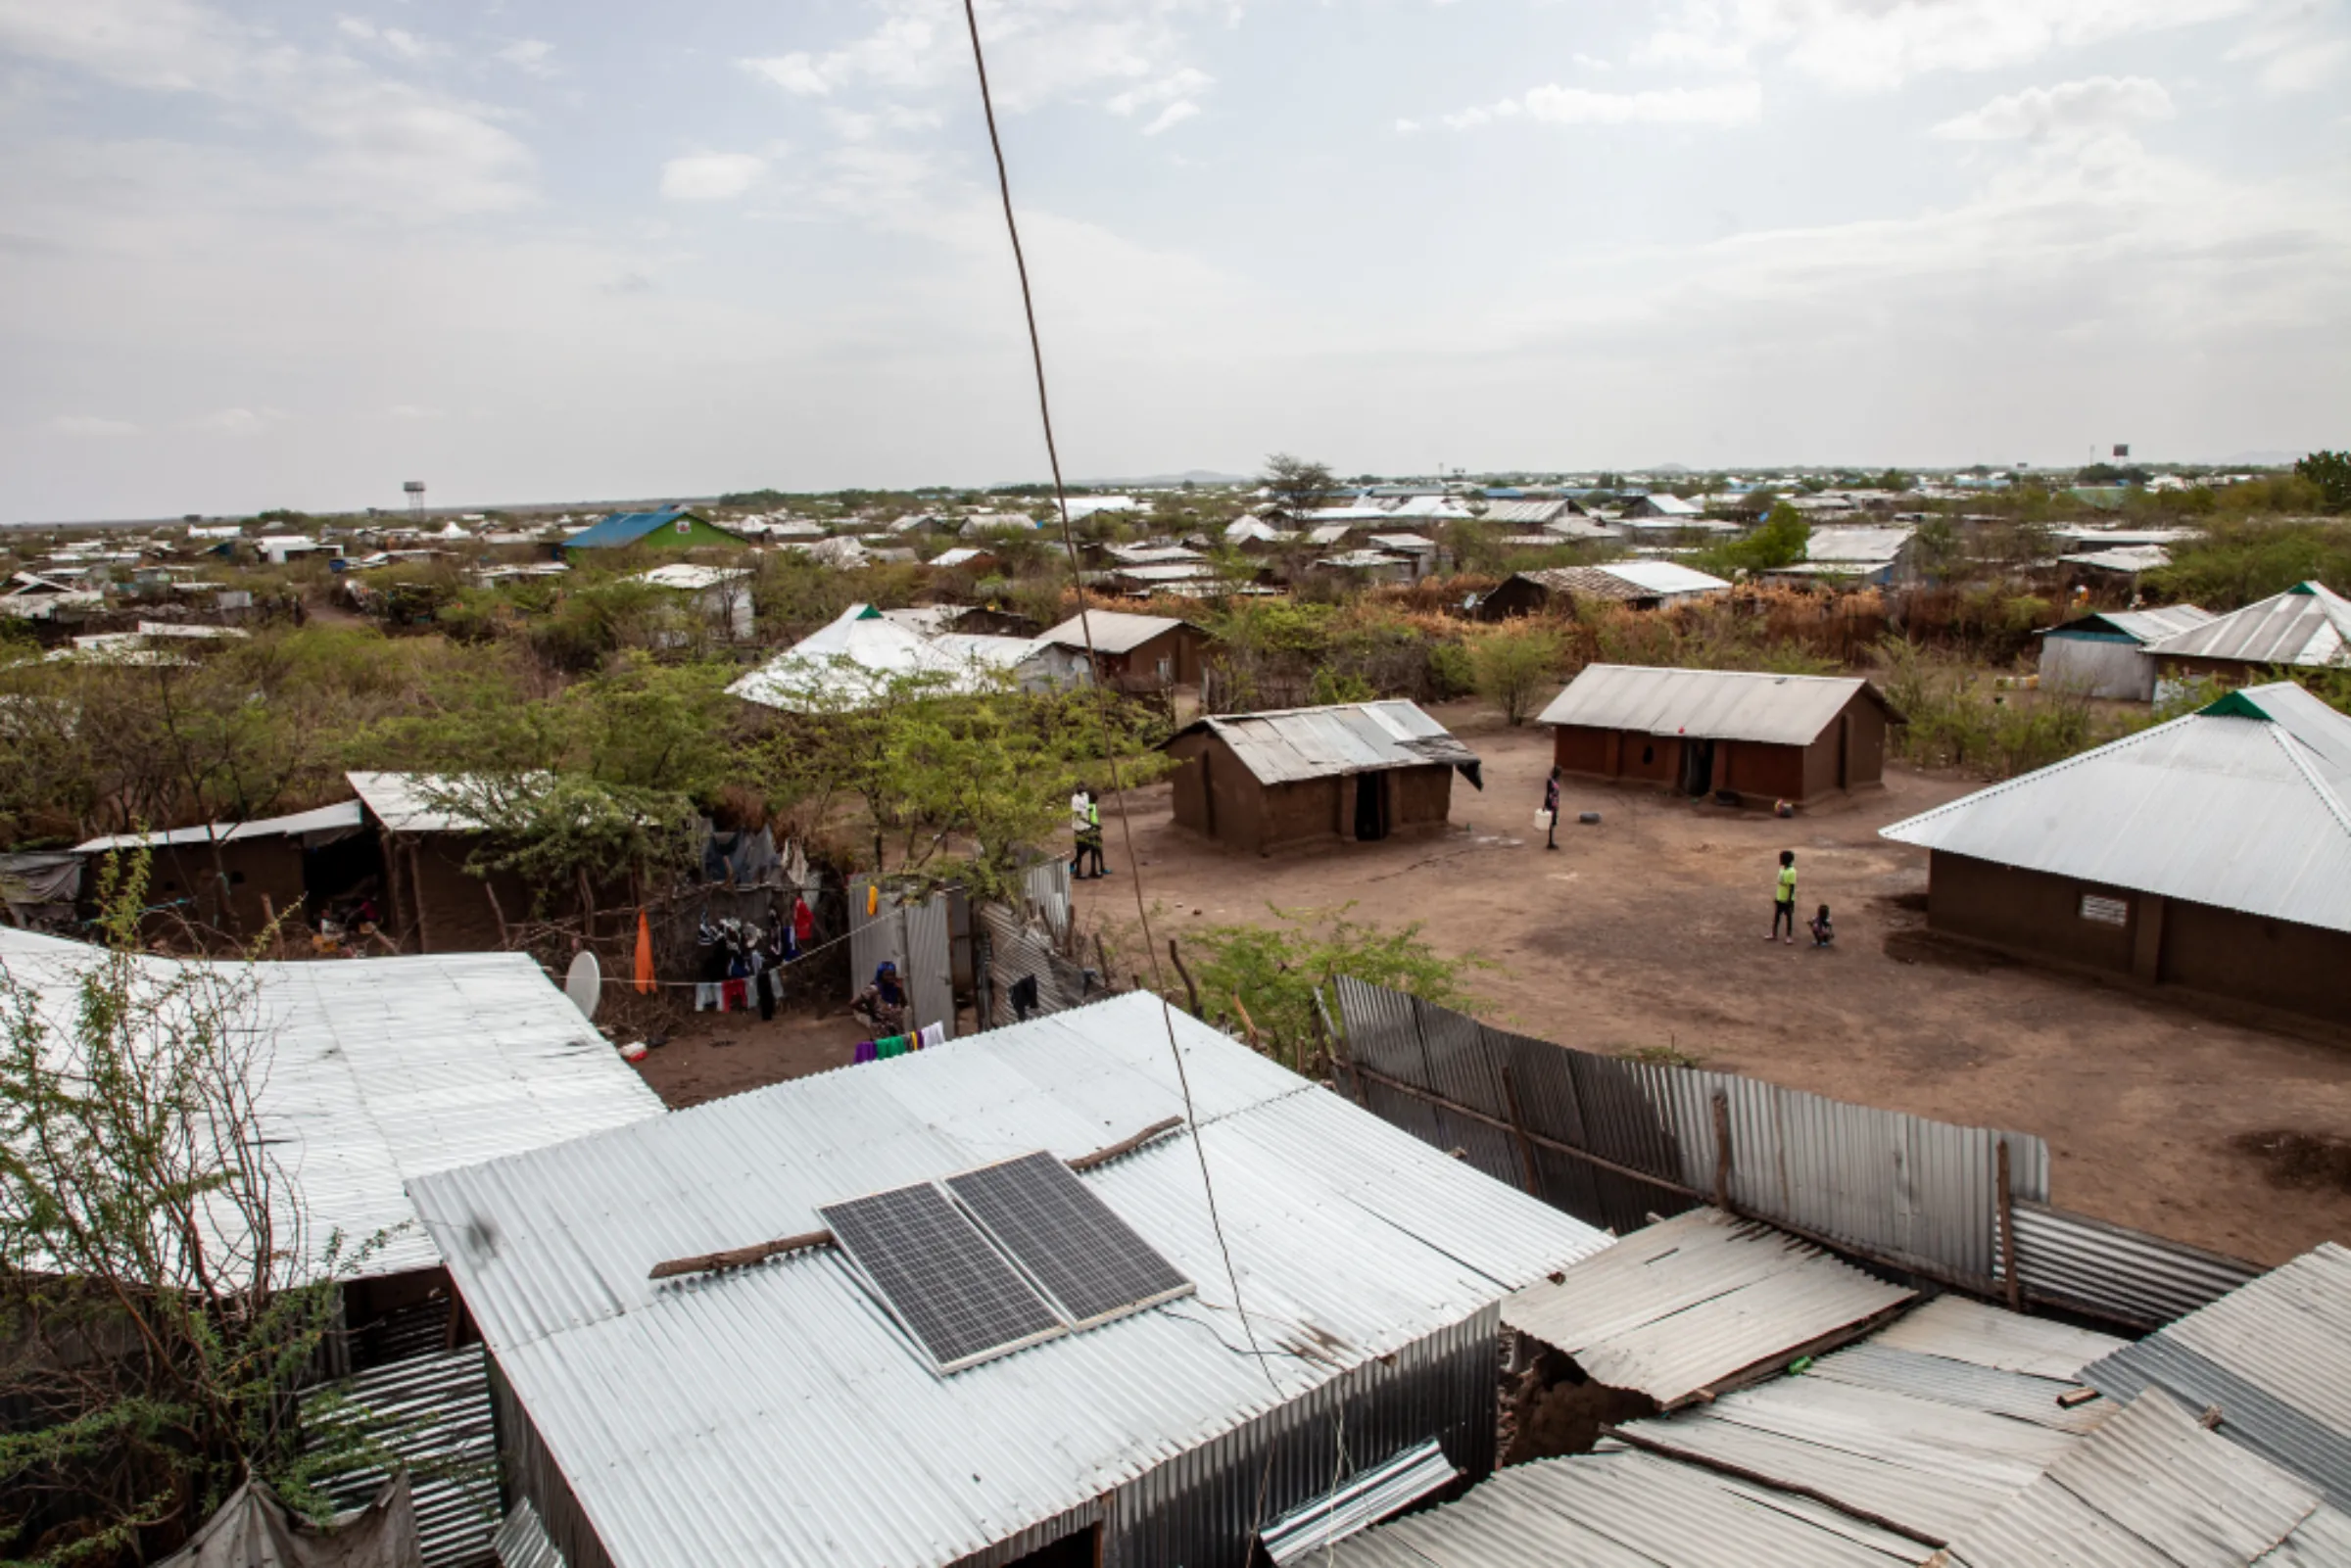 A view of a solar-panel roofinstallation in Kenya's Kakuma refugee camp